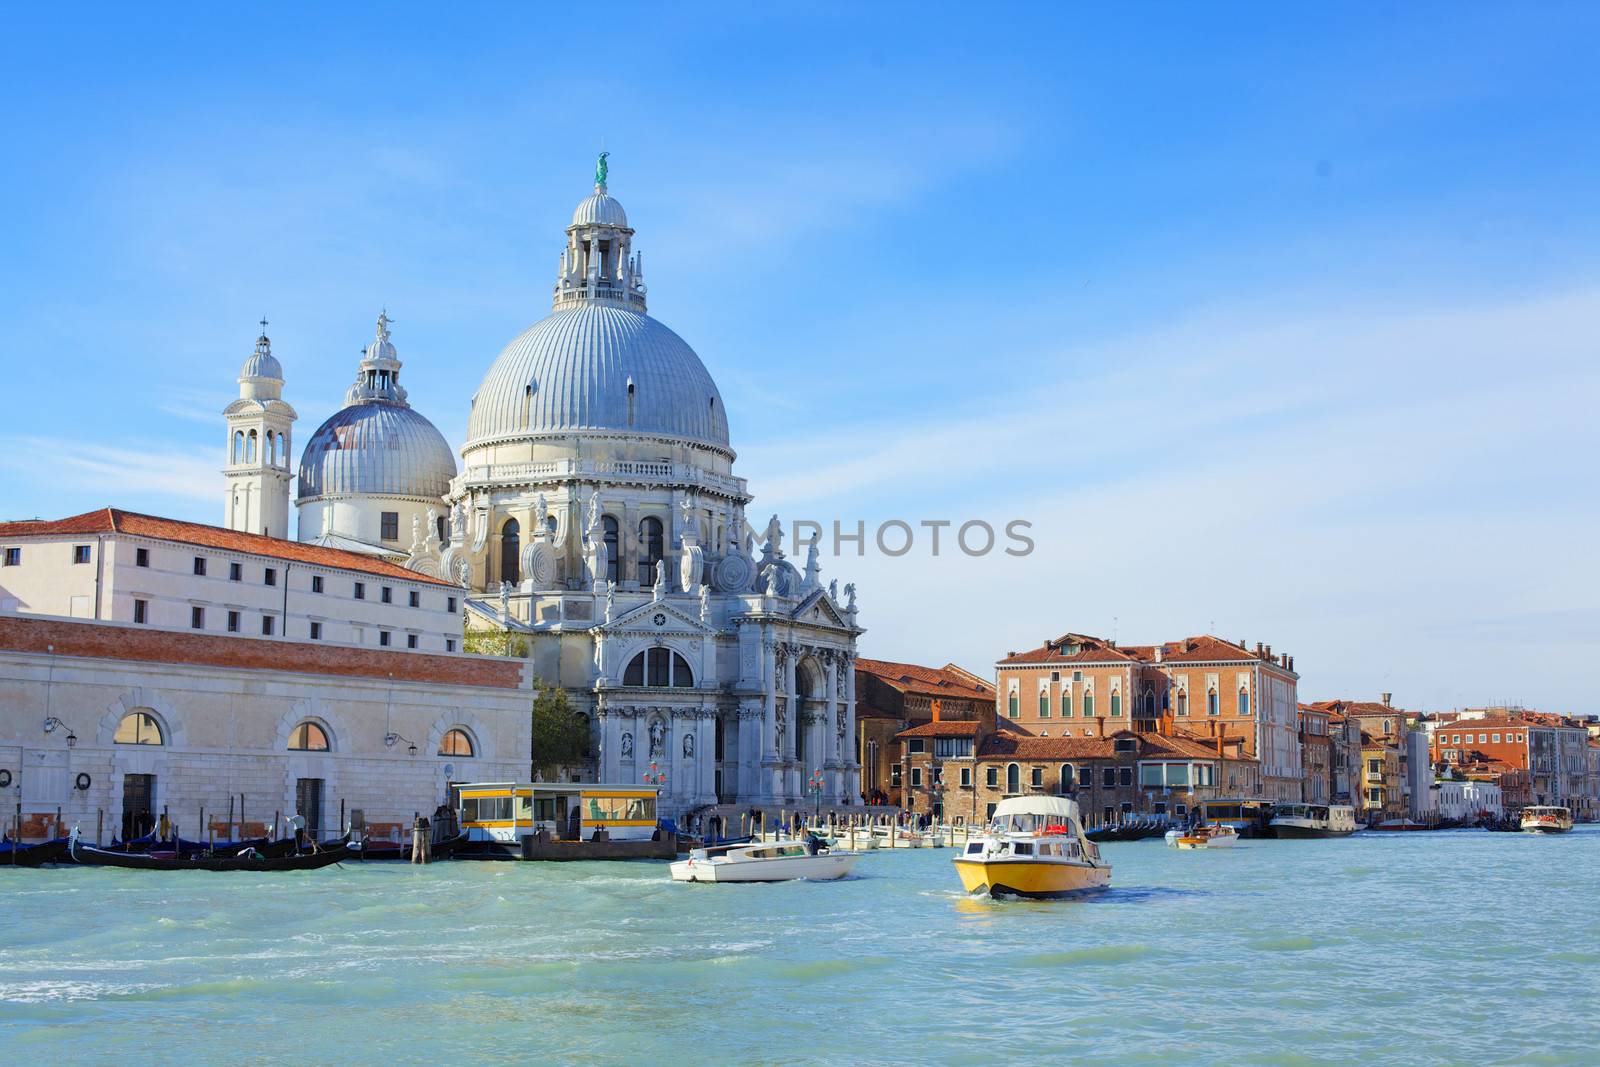 Grand Canal and Basilica Santa Maria della Salute by maxoliki